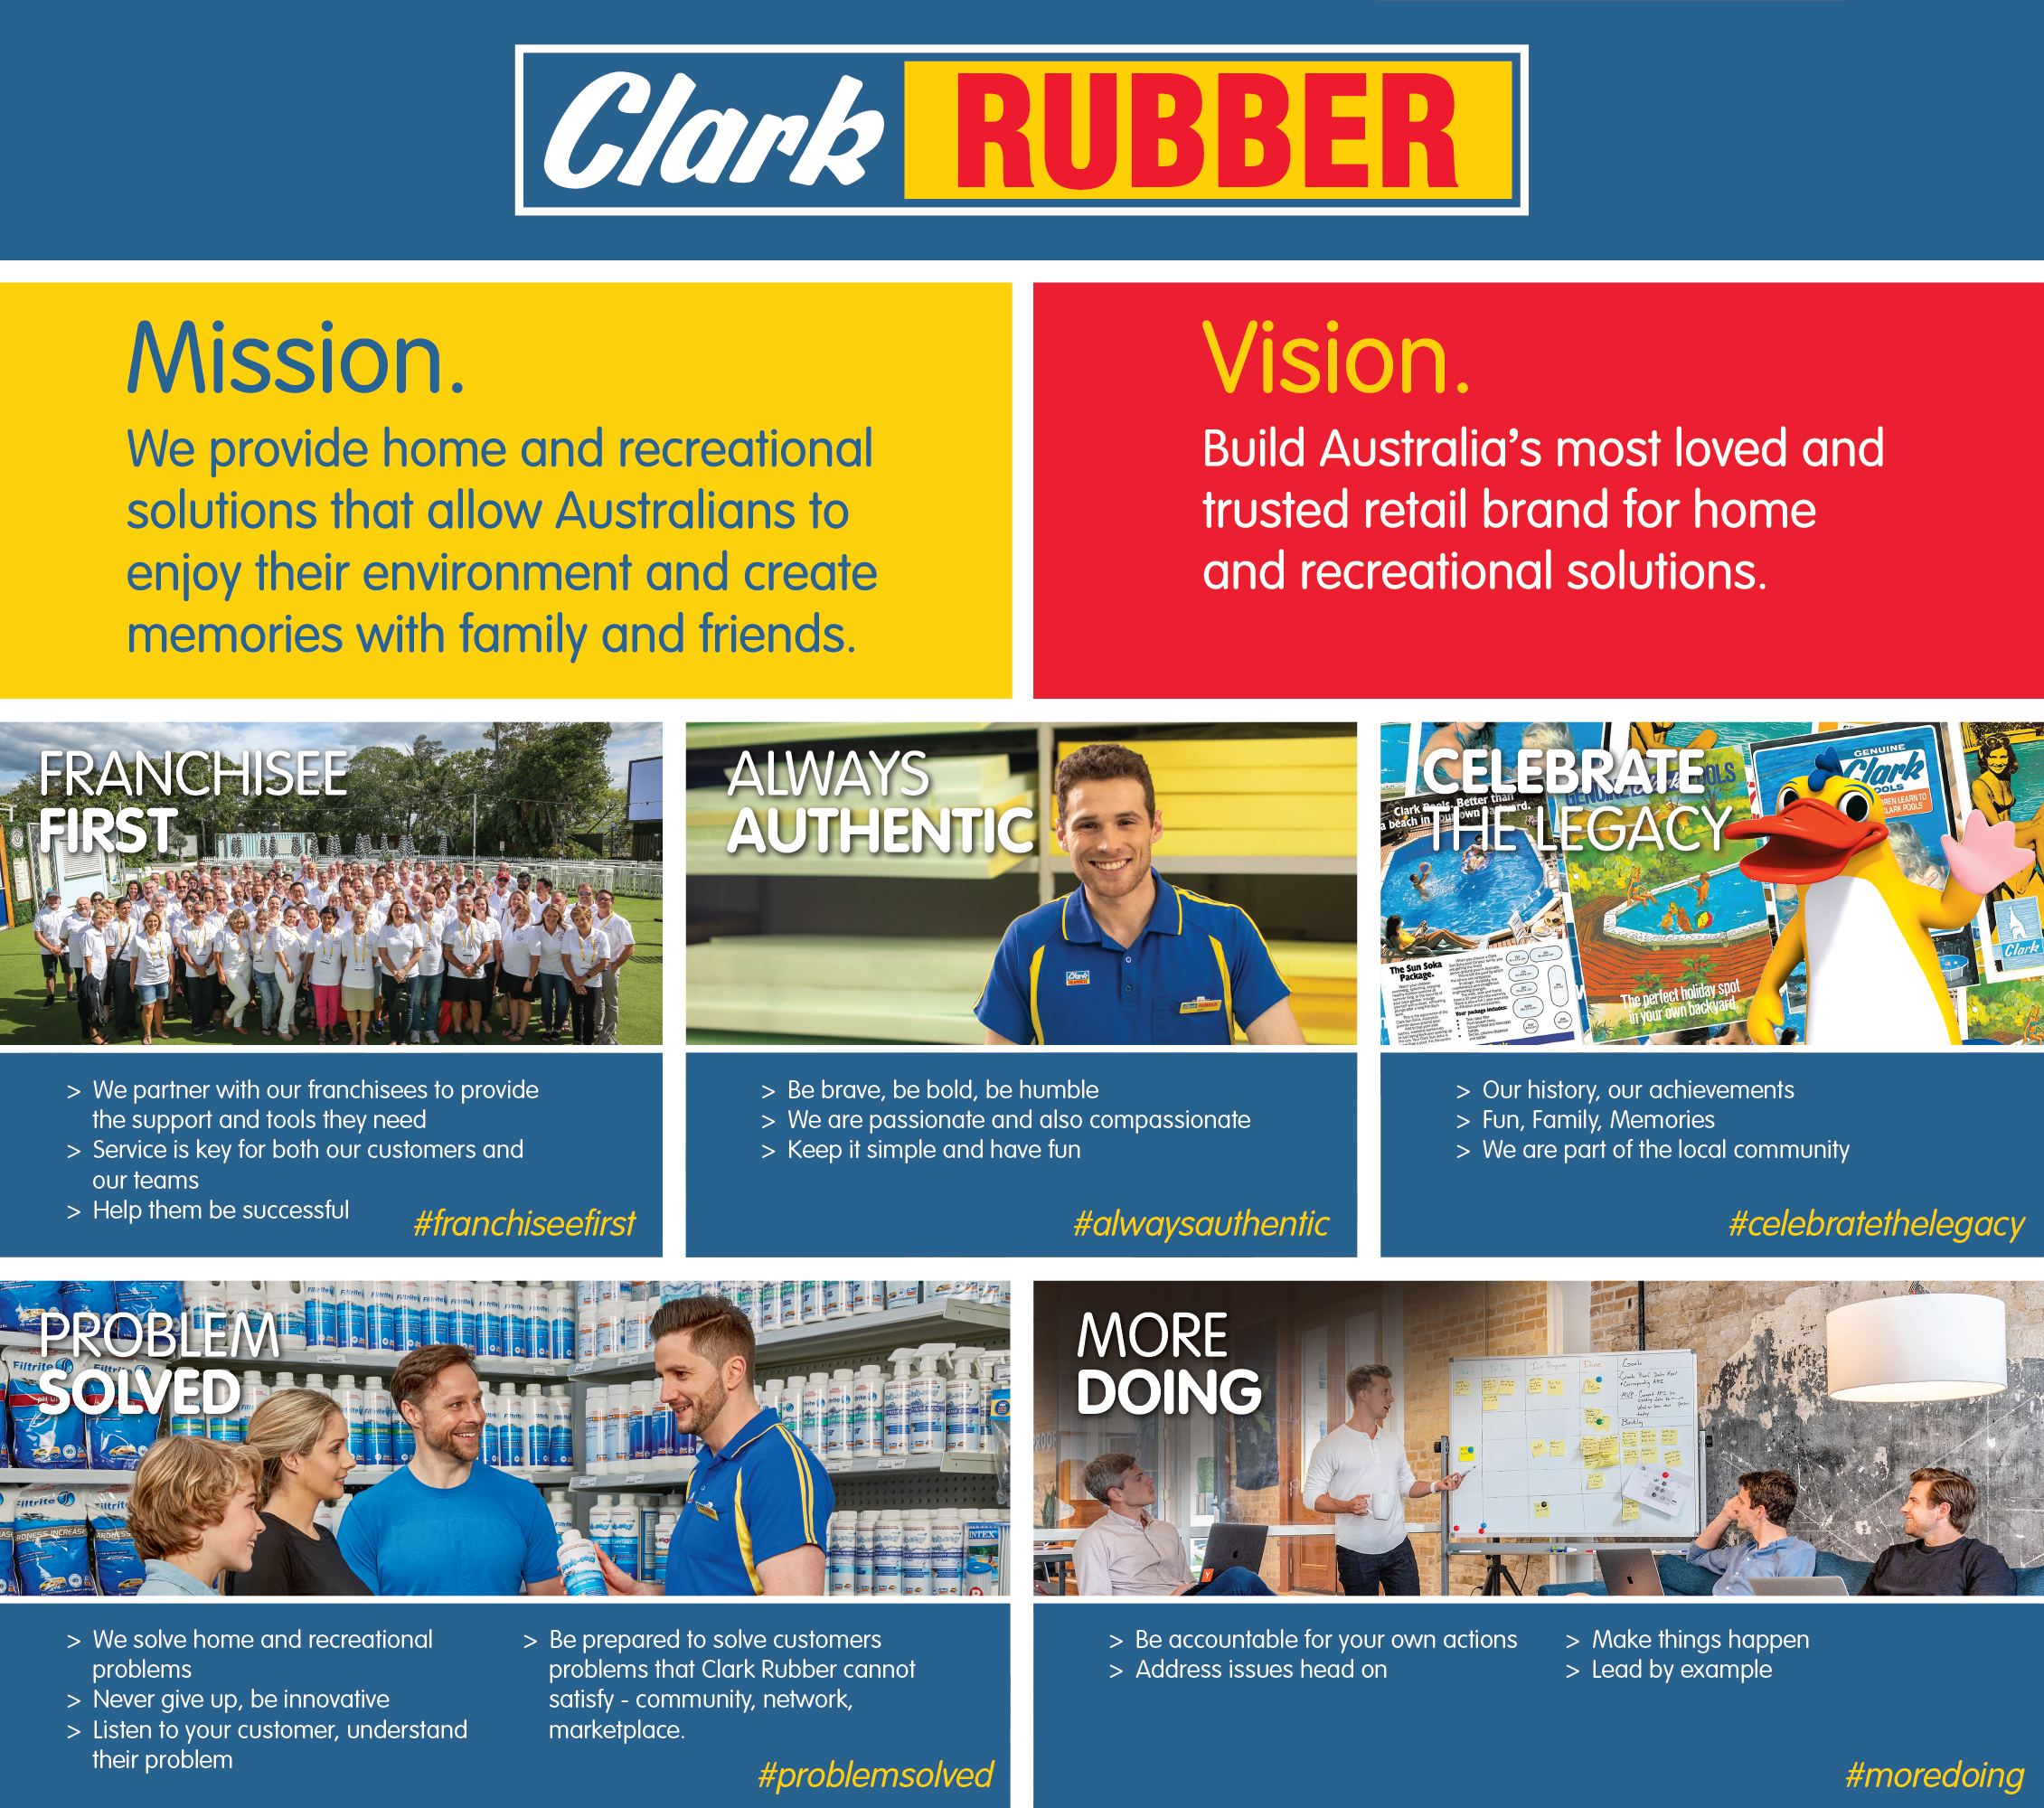 Clark Rubber vision & mission